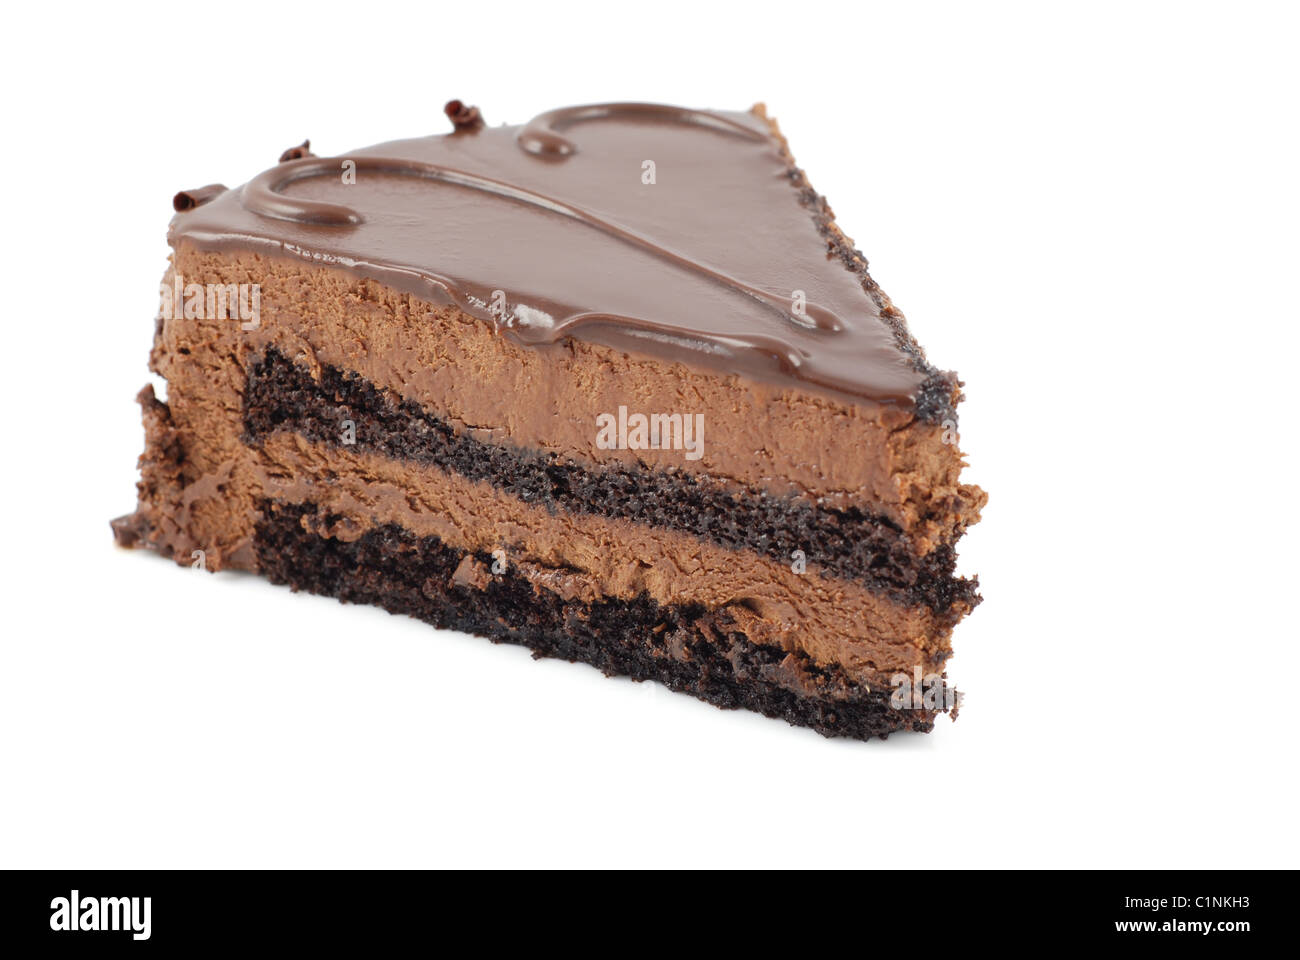 Chocolate cake isolated Stock Photo